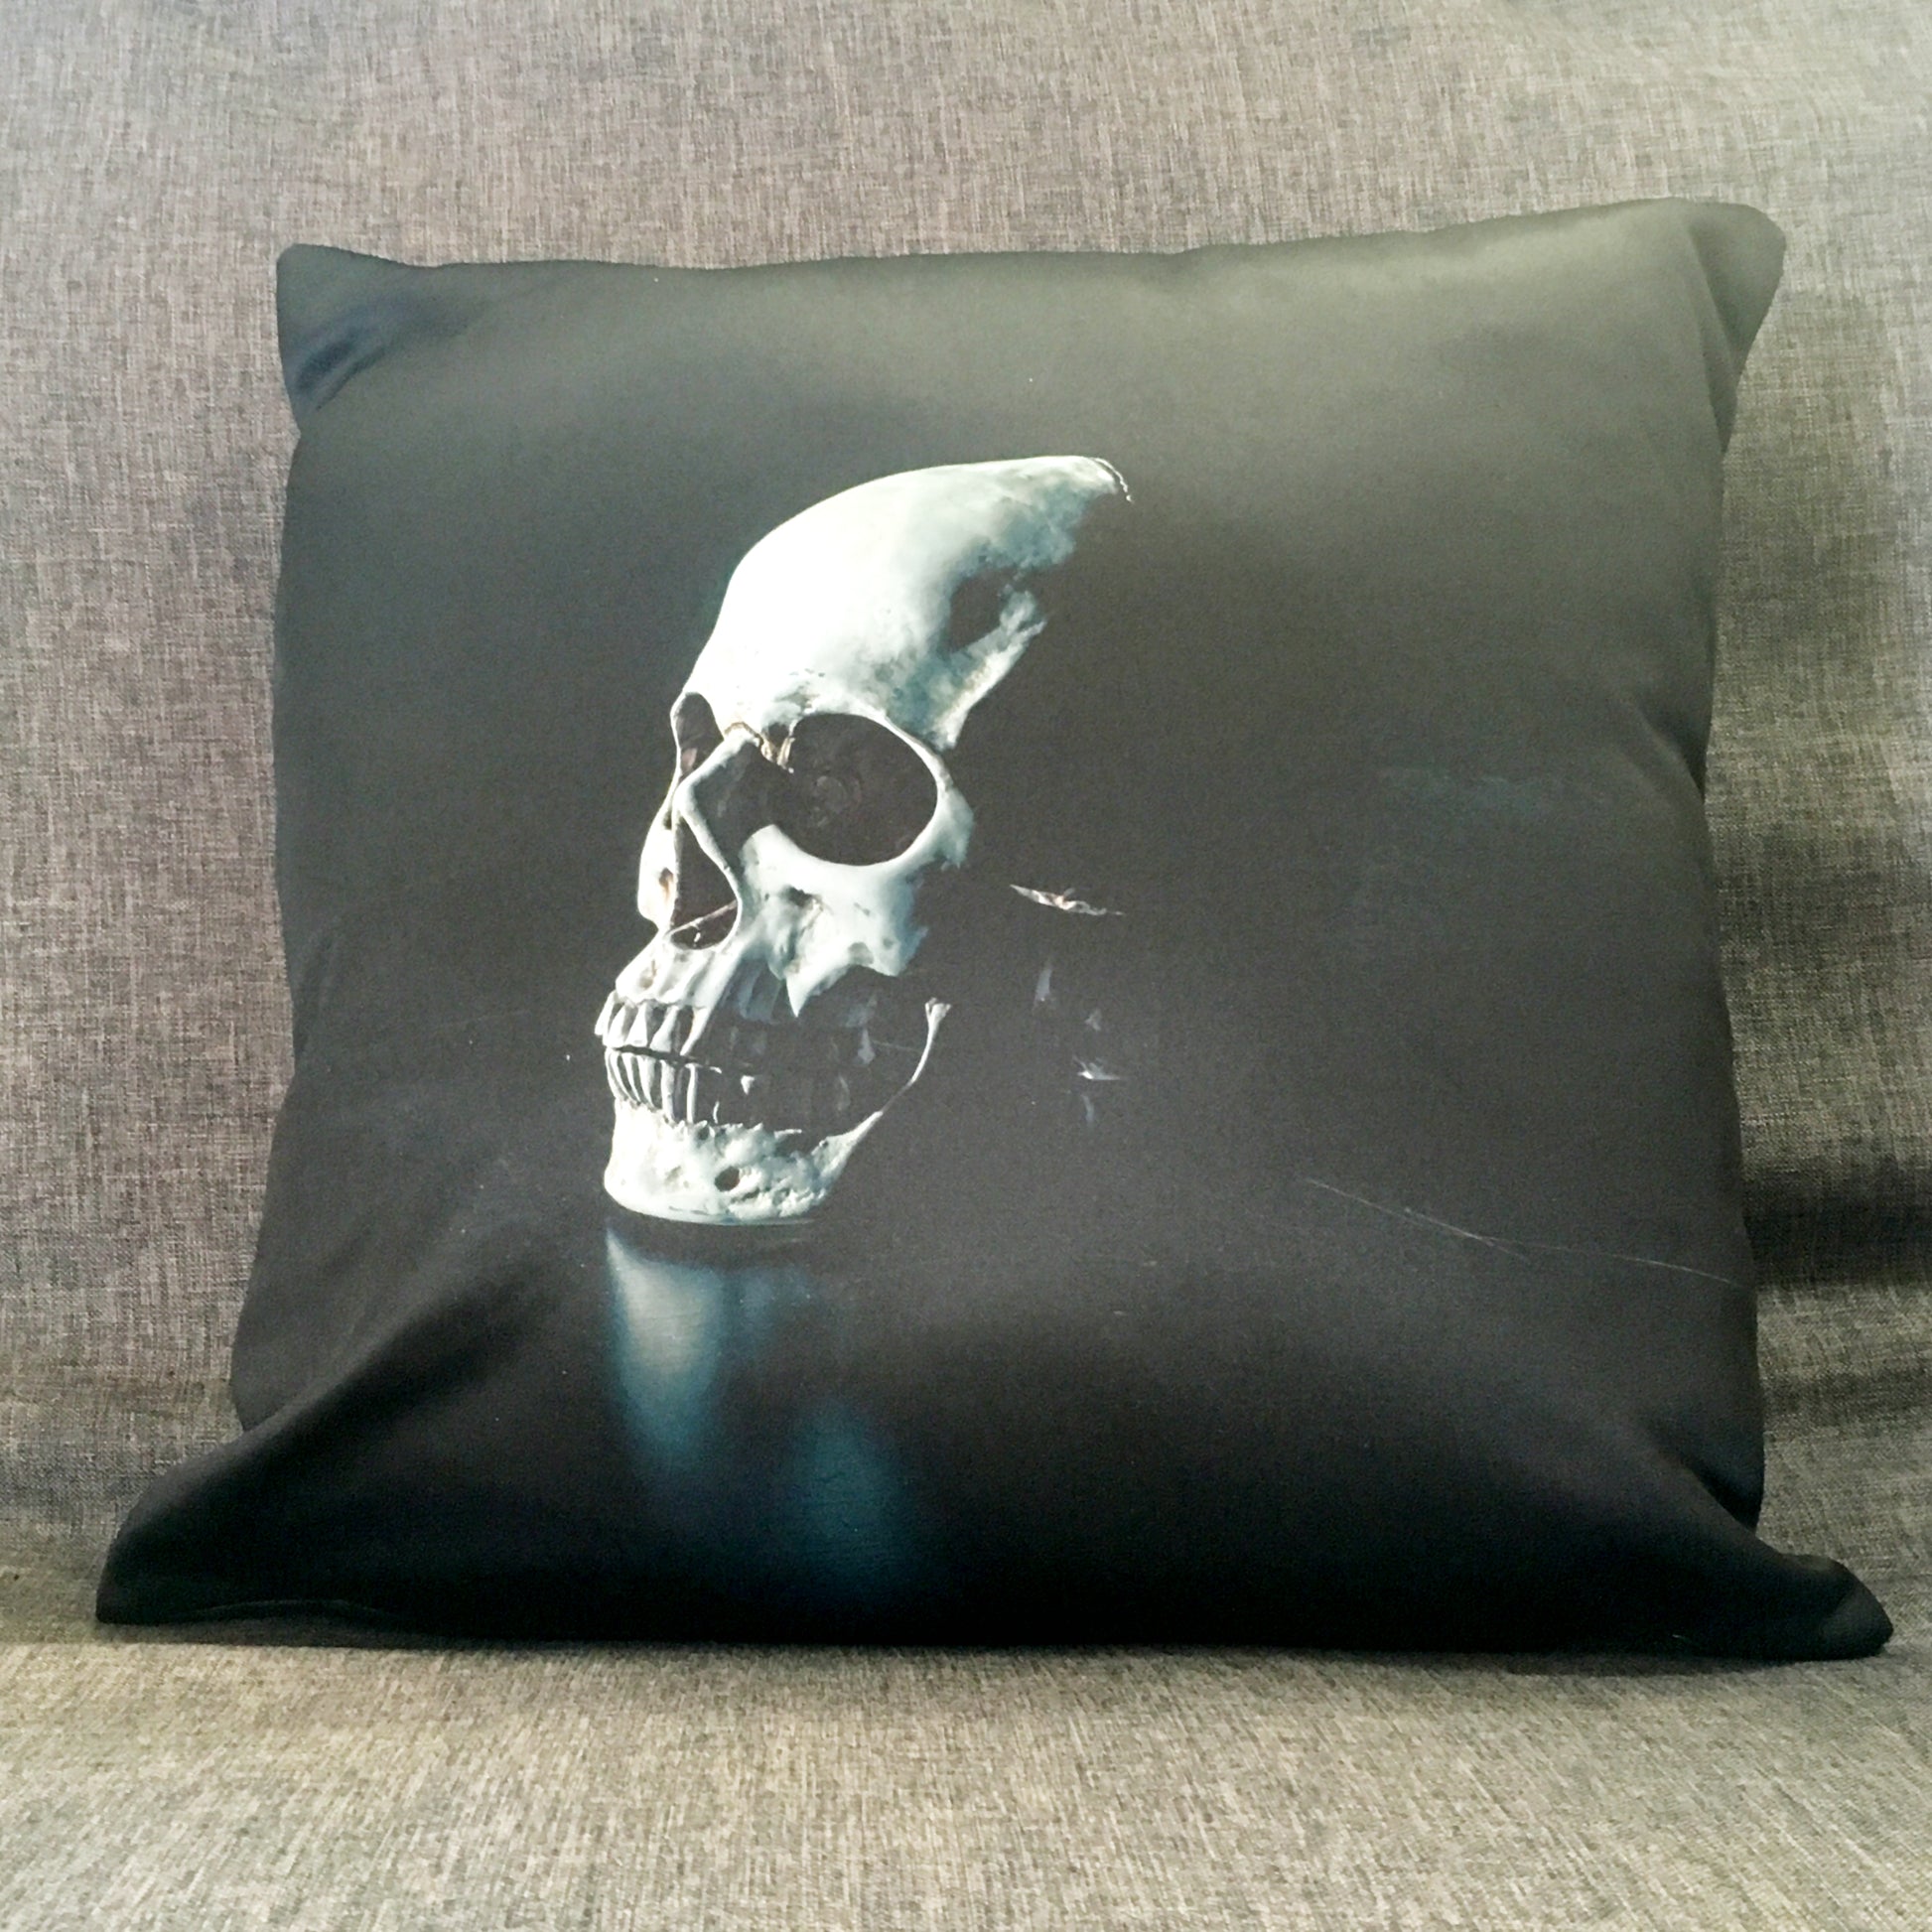 Throw pillow with single skull facing at an angle